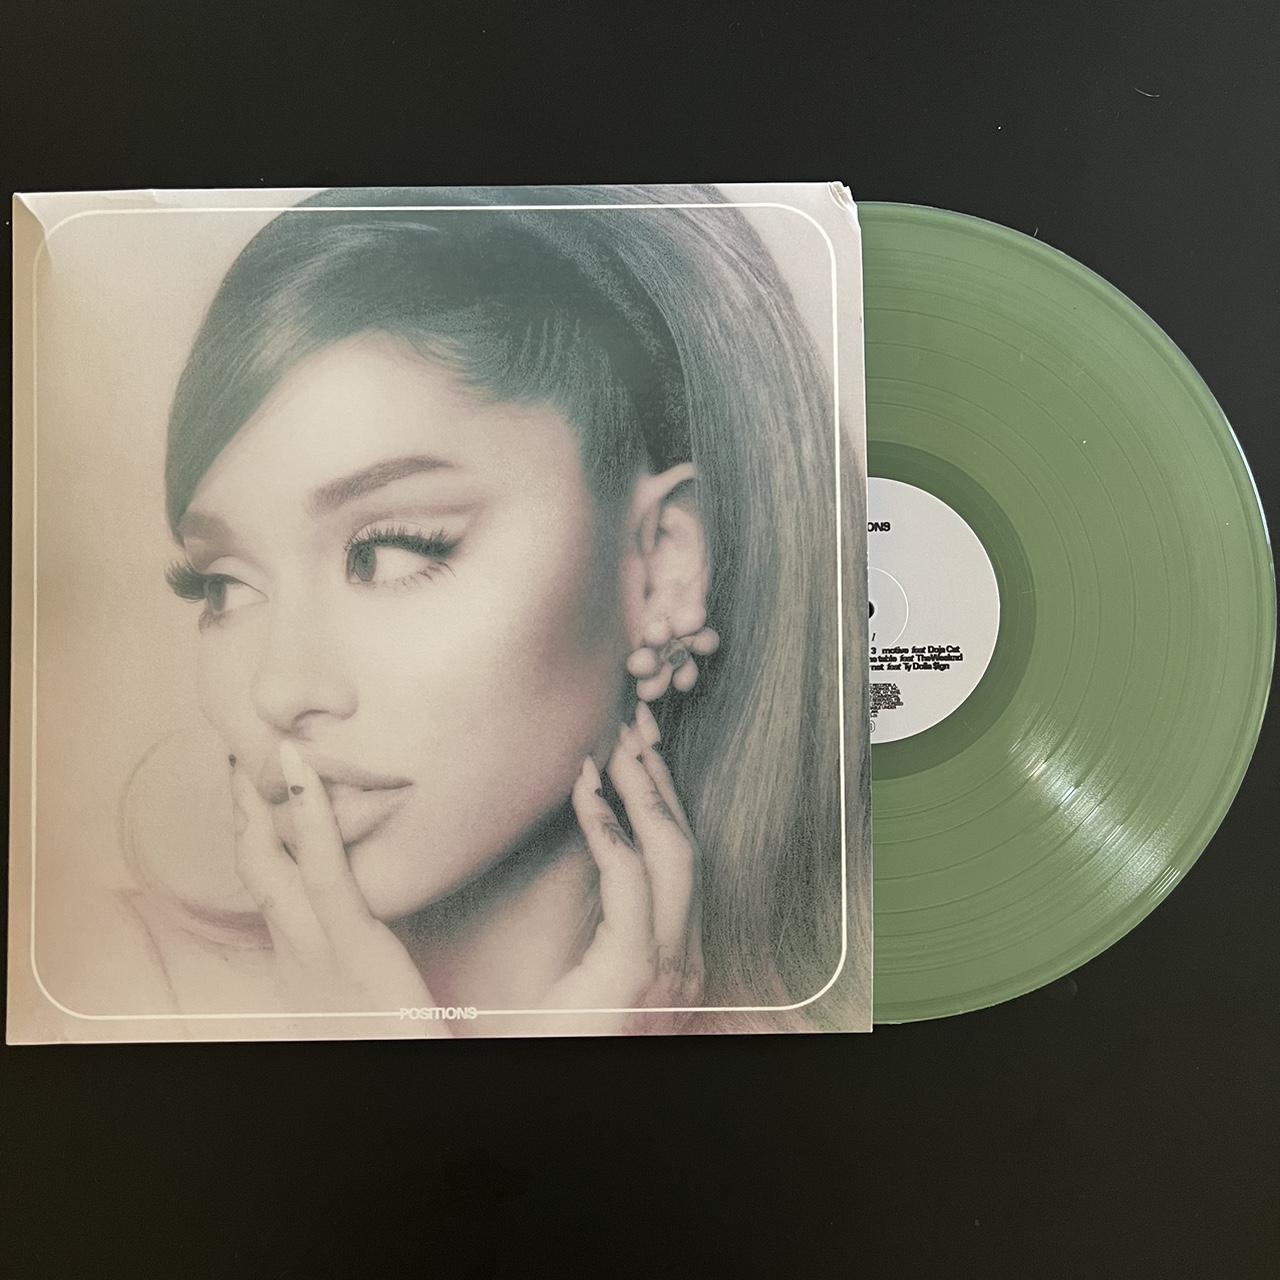 Ariana Grande Positions Vinyl! 🪐 - In great - Depop